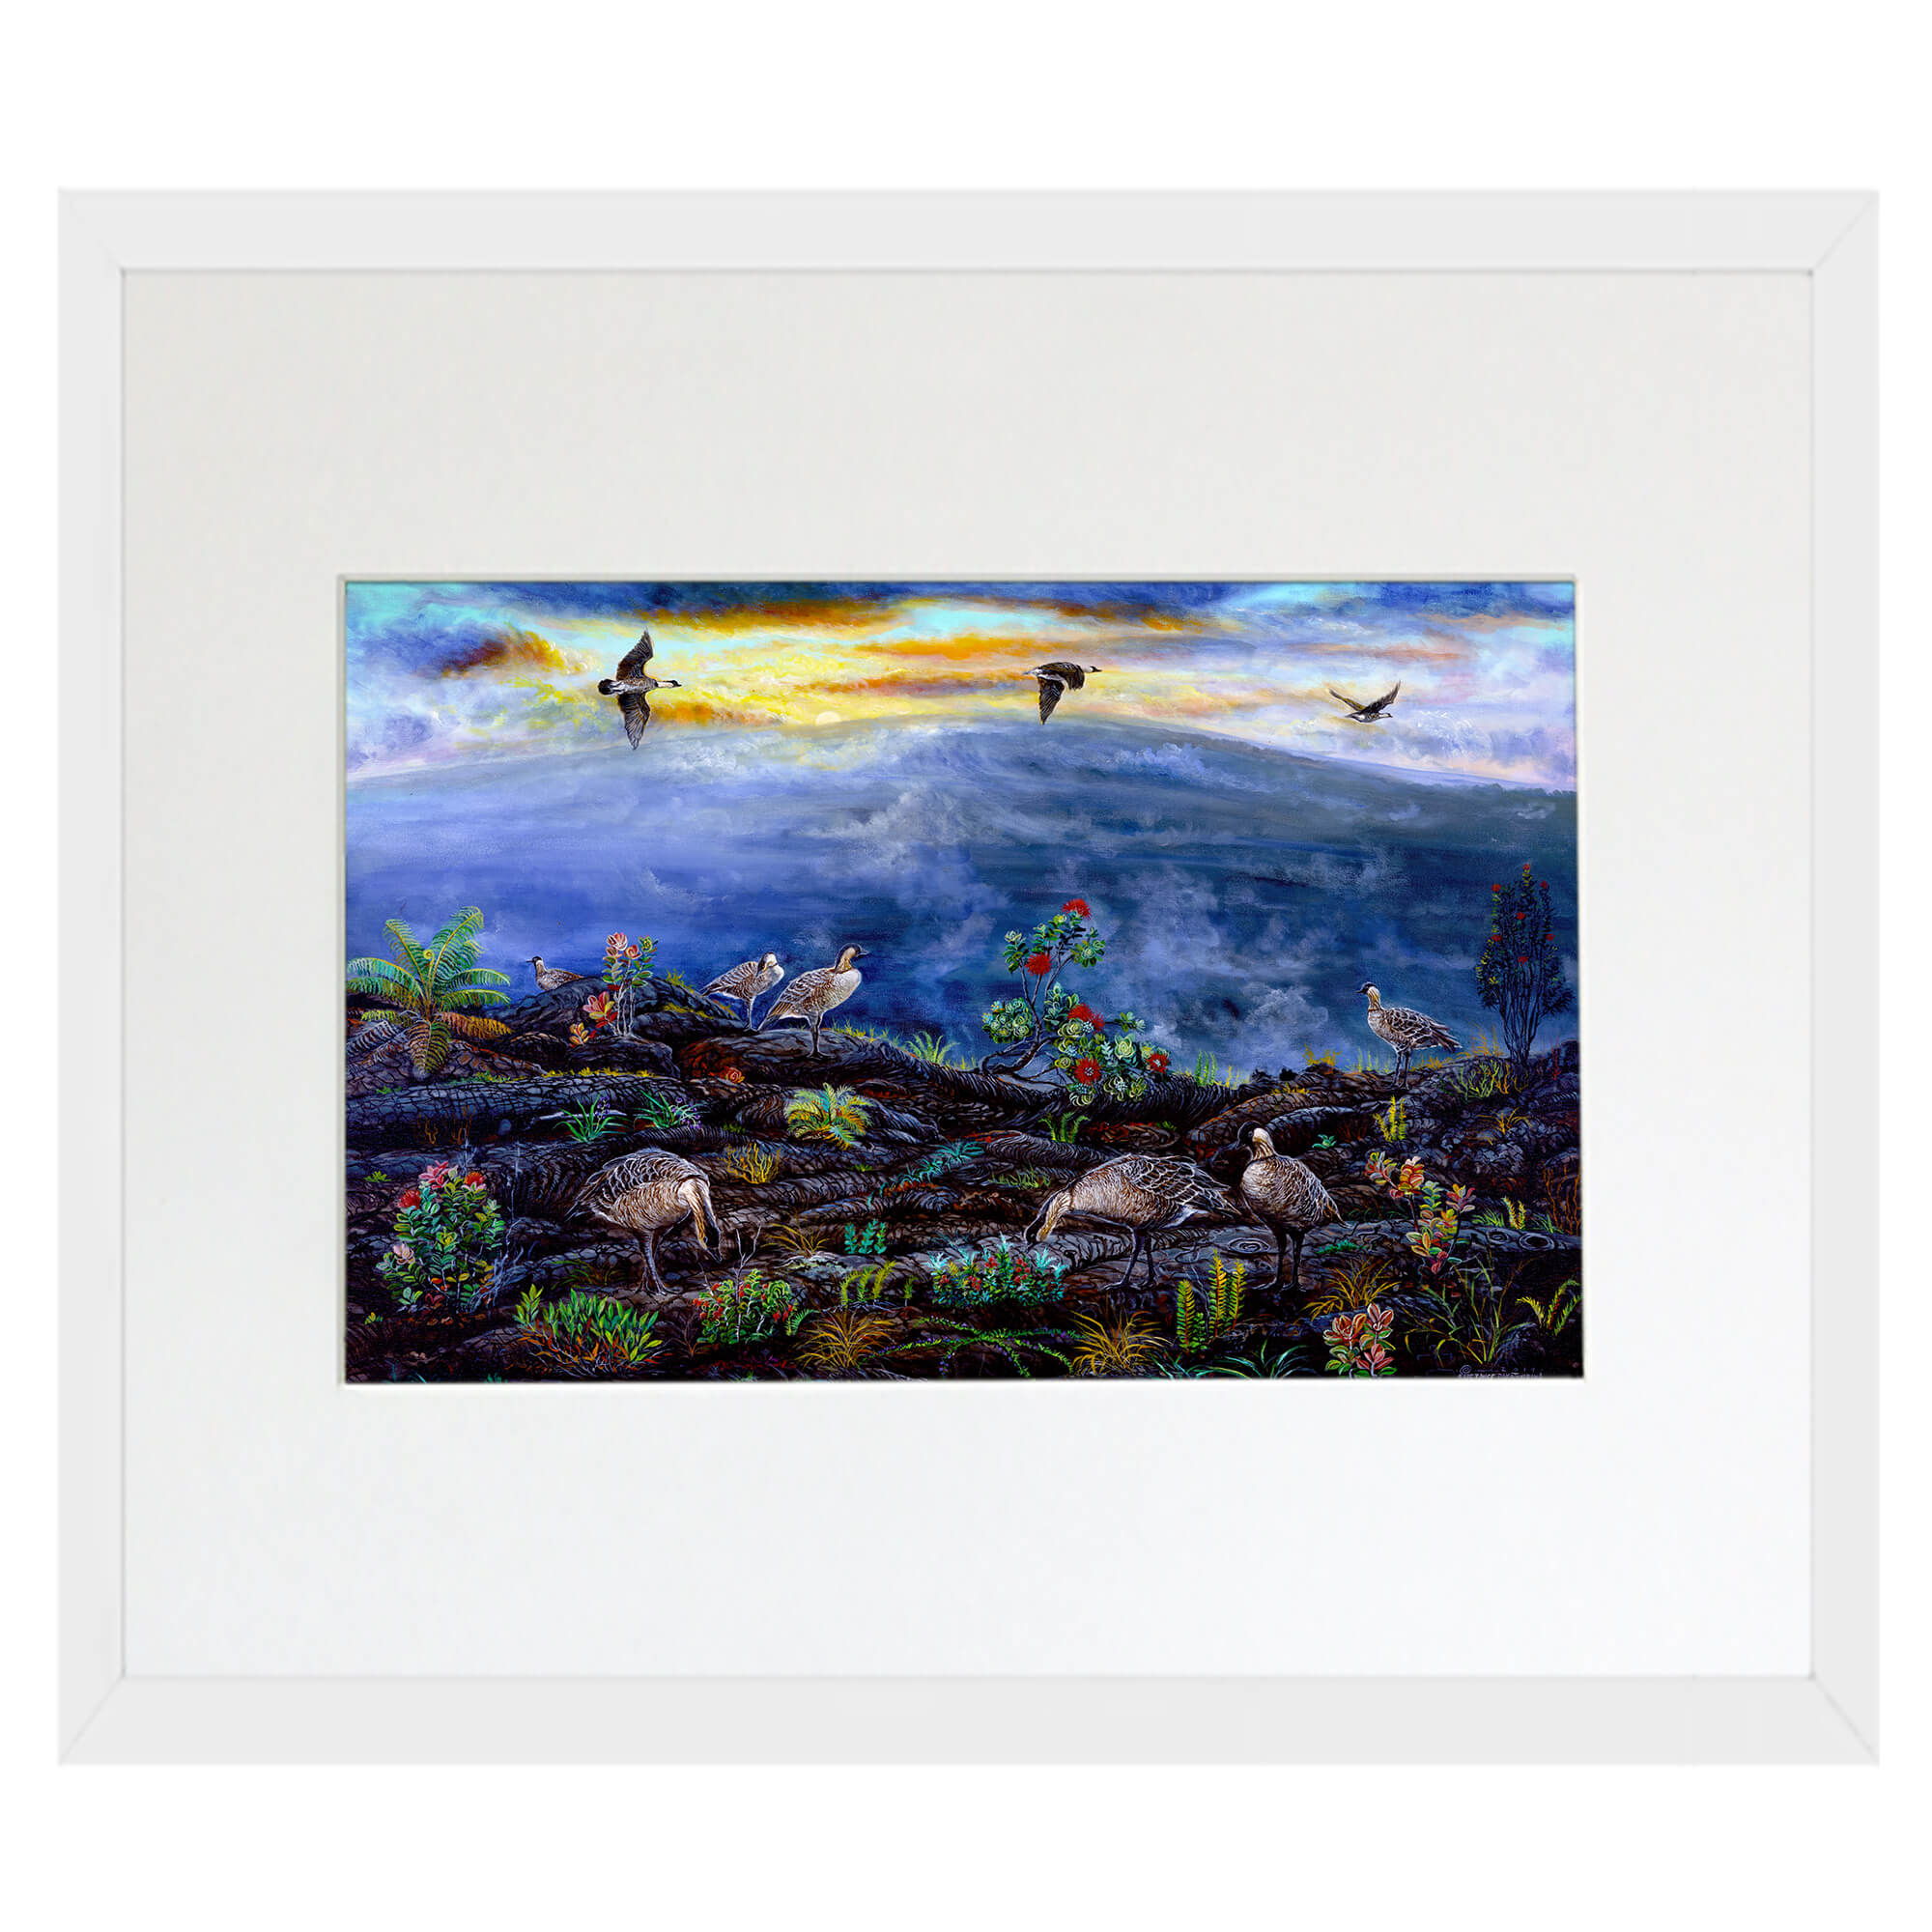 Matted art print with white frame featuring lava rocks by hawaii artist Esperance Rakotonirina